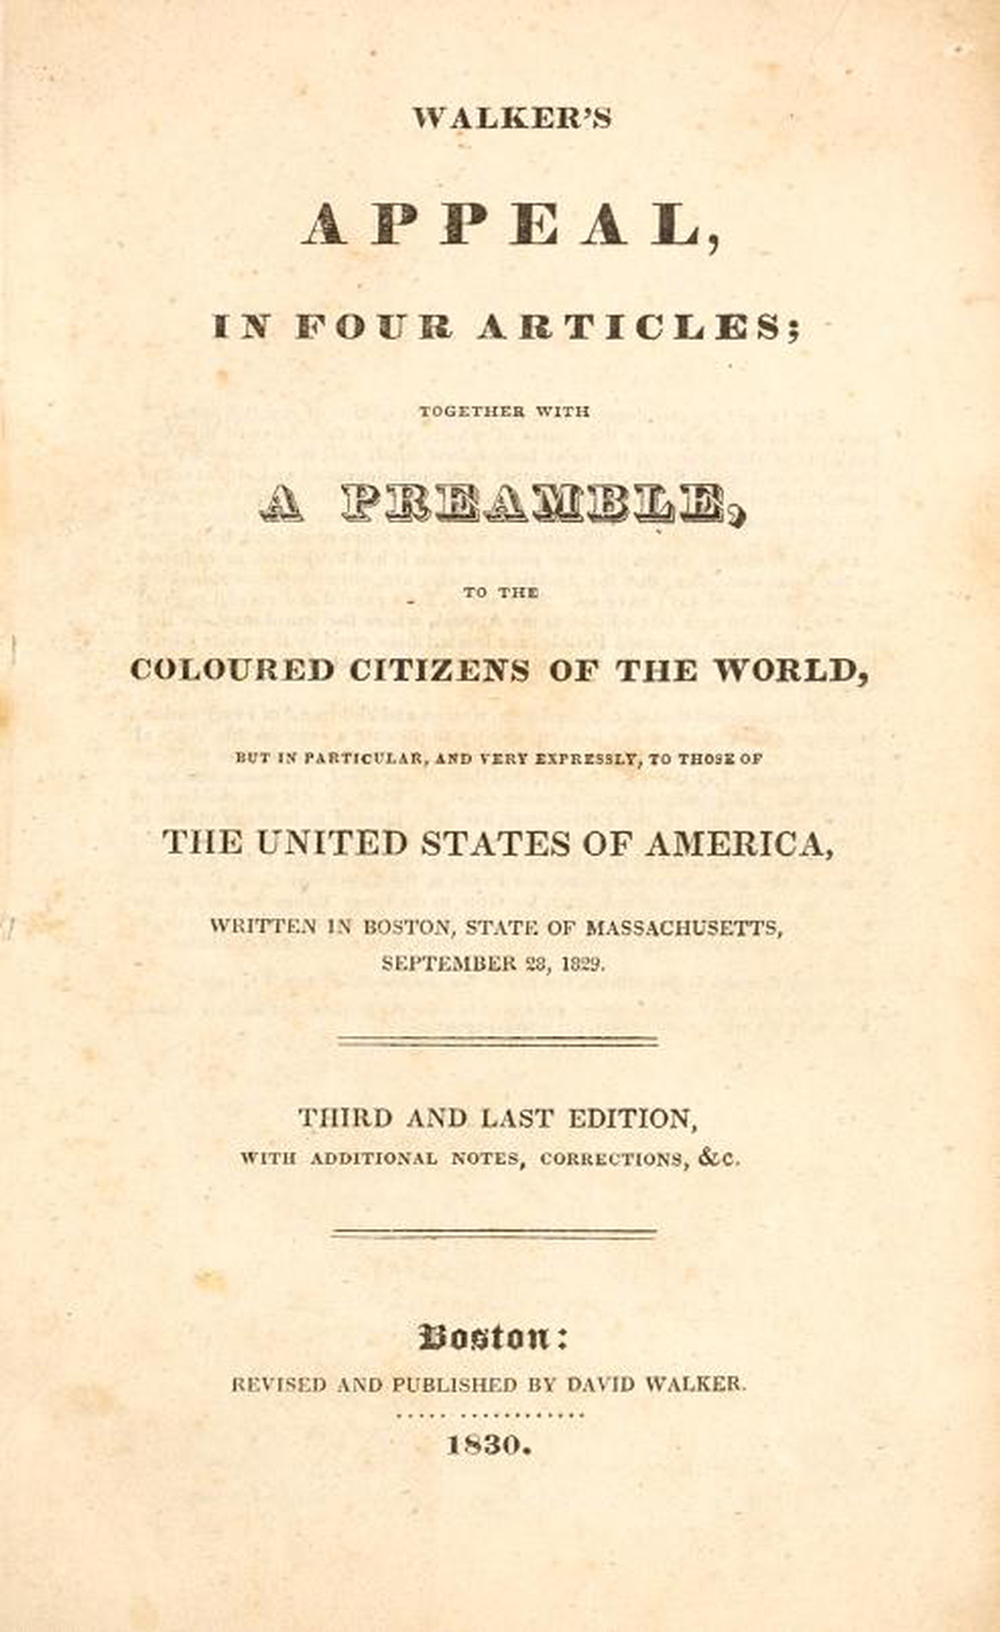 David Walker’s Appeal, 1830. Internet Archive, The Johns Hopkins University Sheridan Libraries.